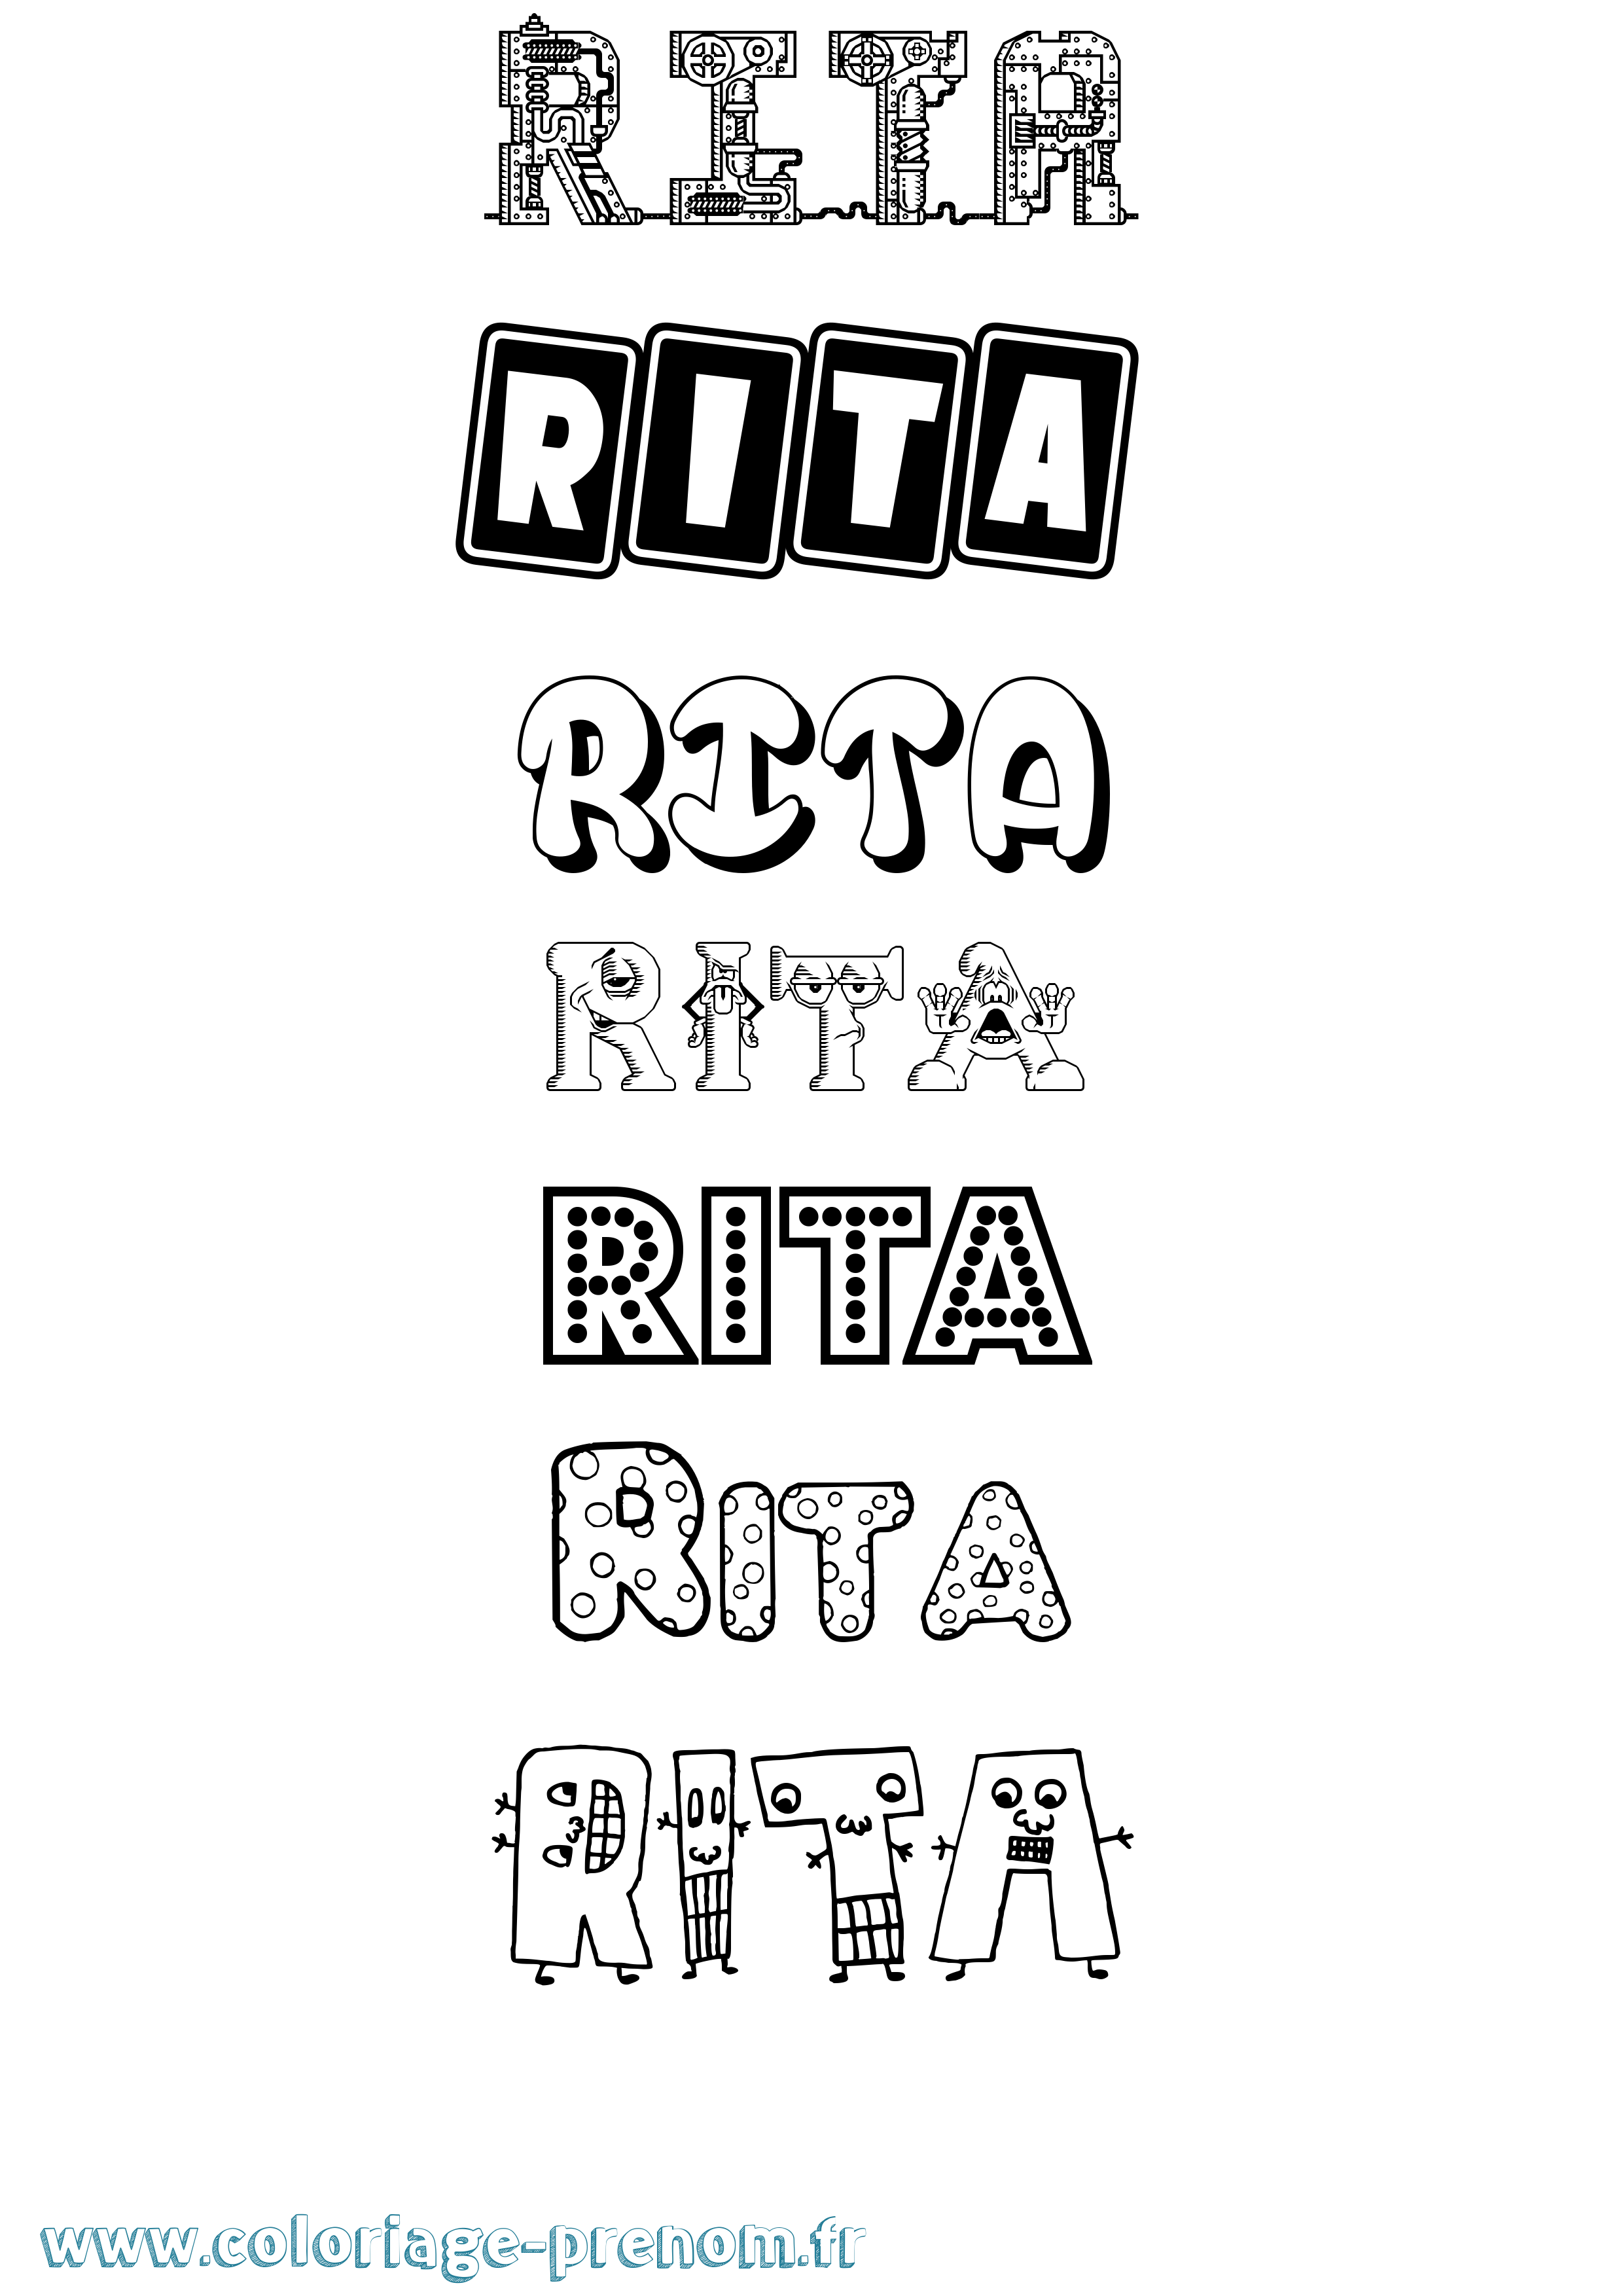 Coloriage prénom Rita